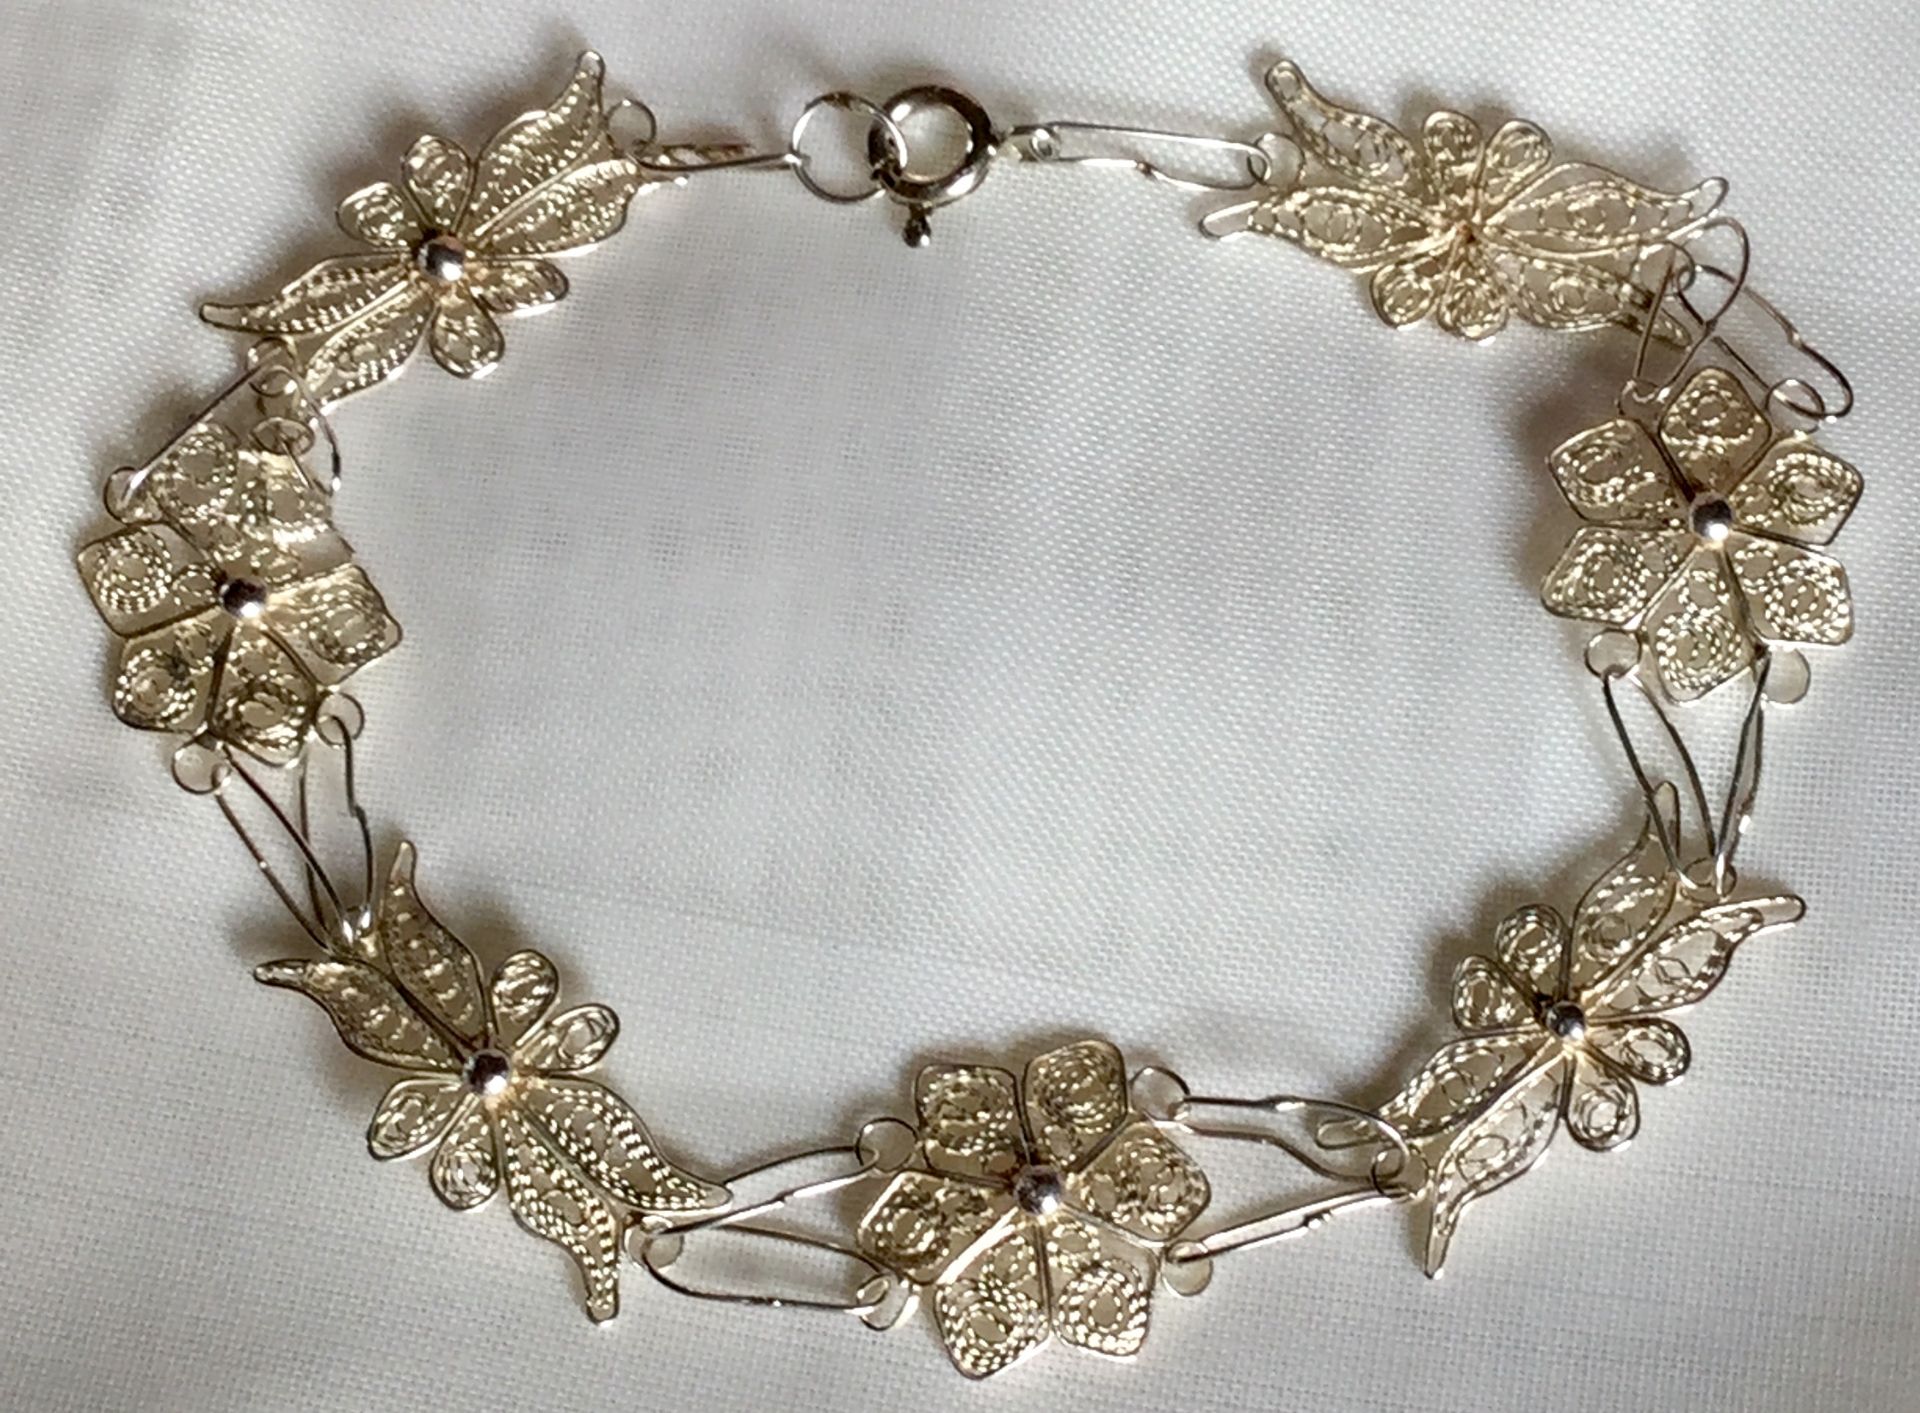 Pretty Intricate Silver bracelet from Malta flower intricate design